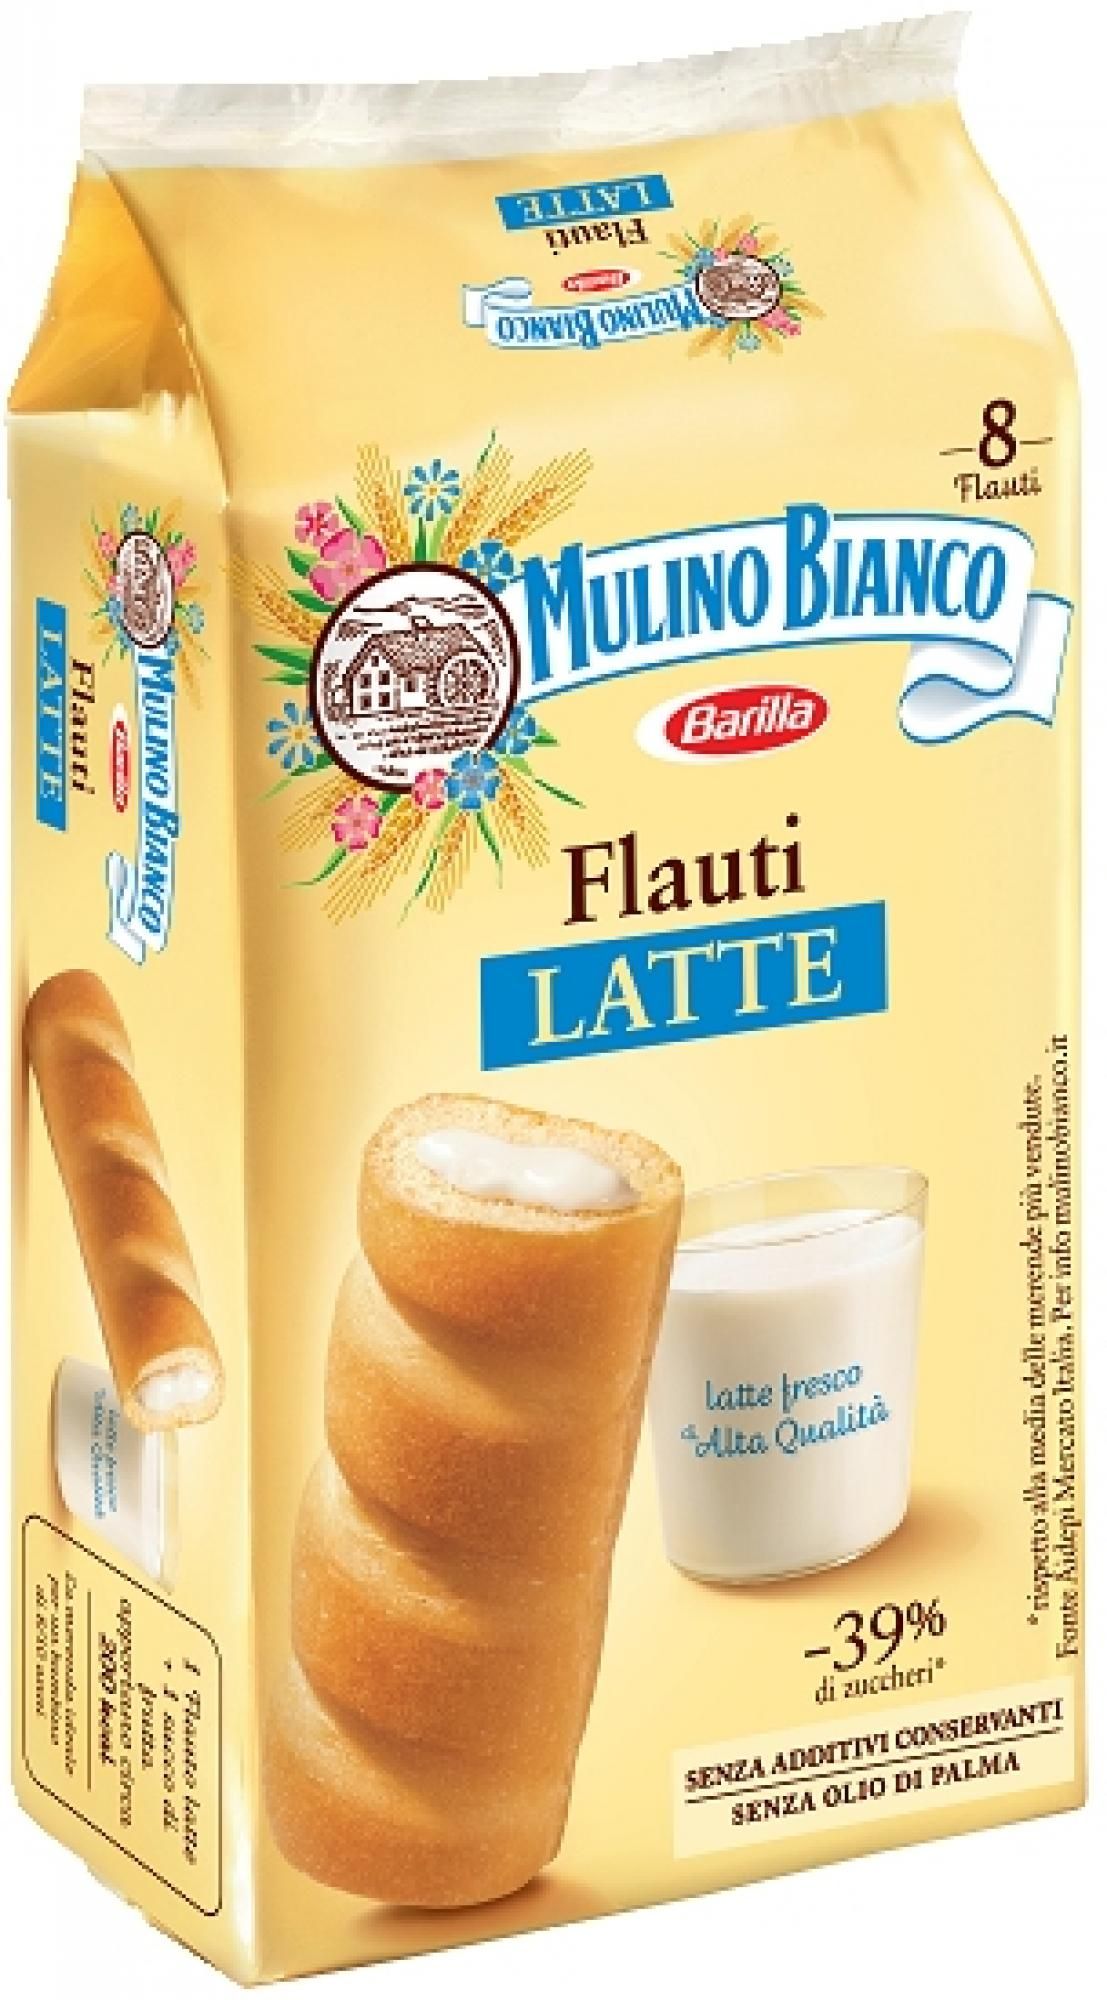 Ferrero: Kinder Bueno White 3pz “Imported from Italy” – Terra